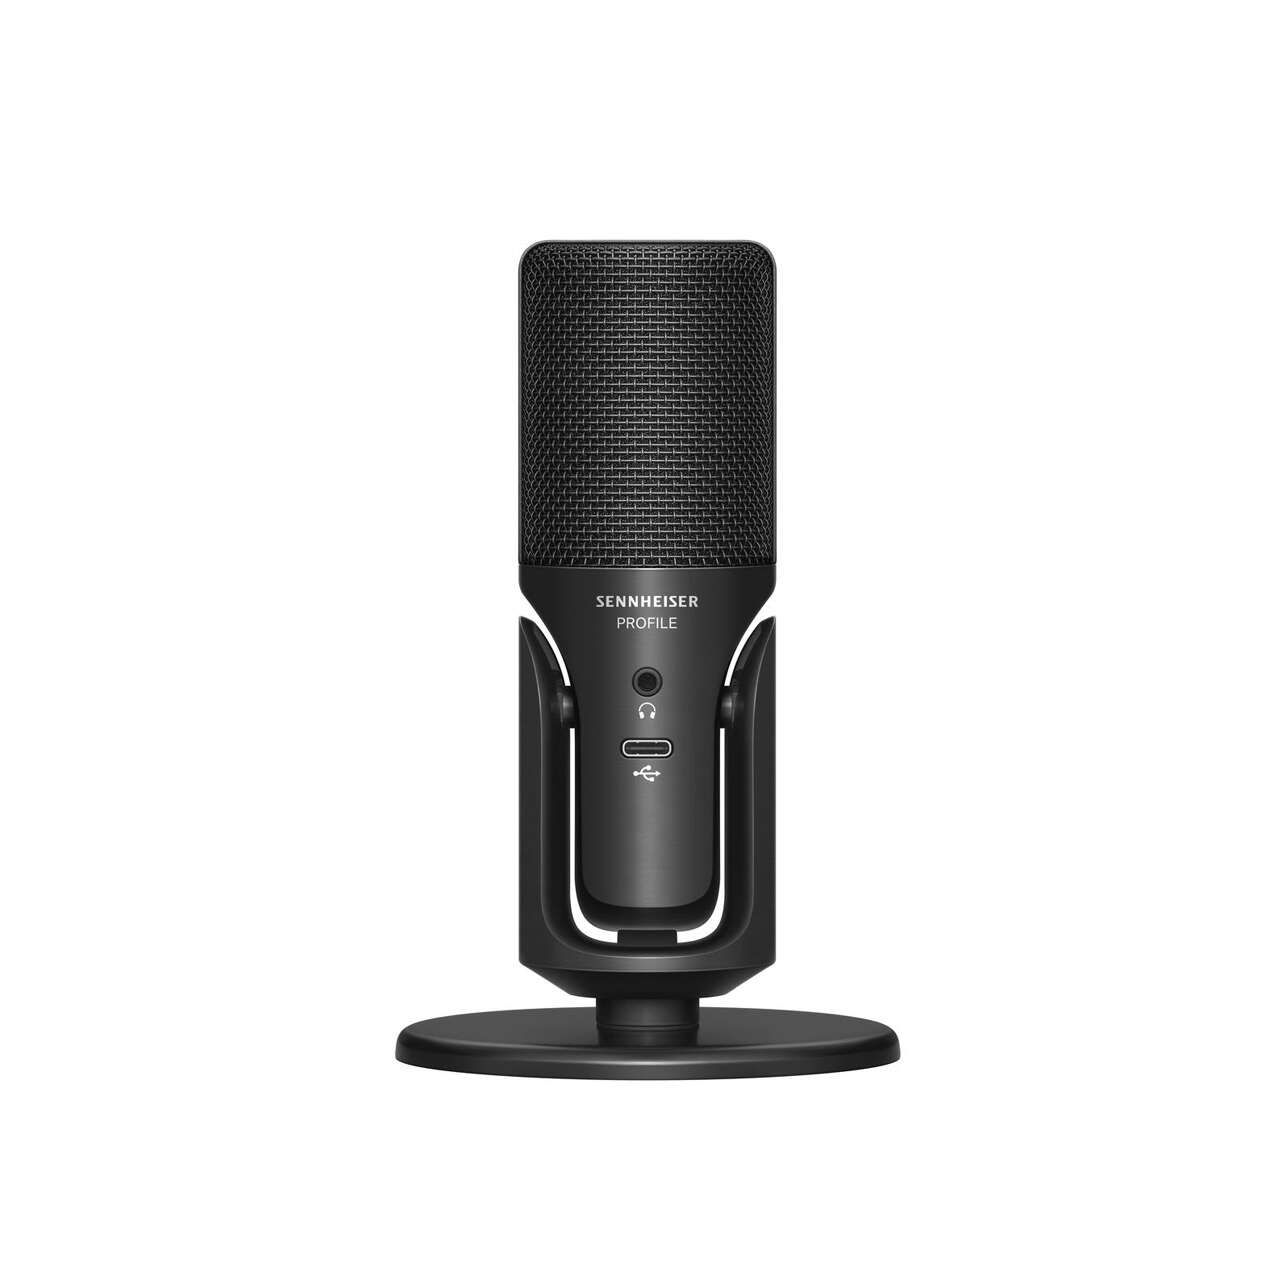 Sennheiser profile podcast/streaming asztali mikrofon, fekete